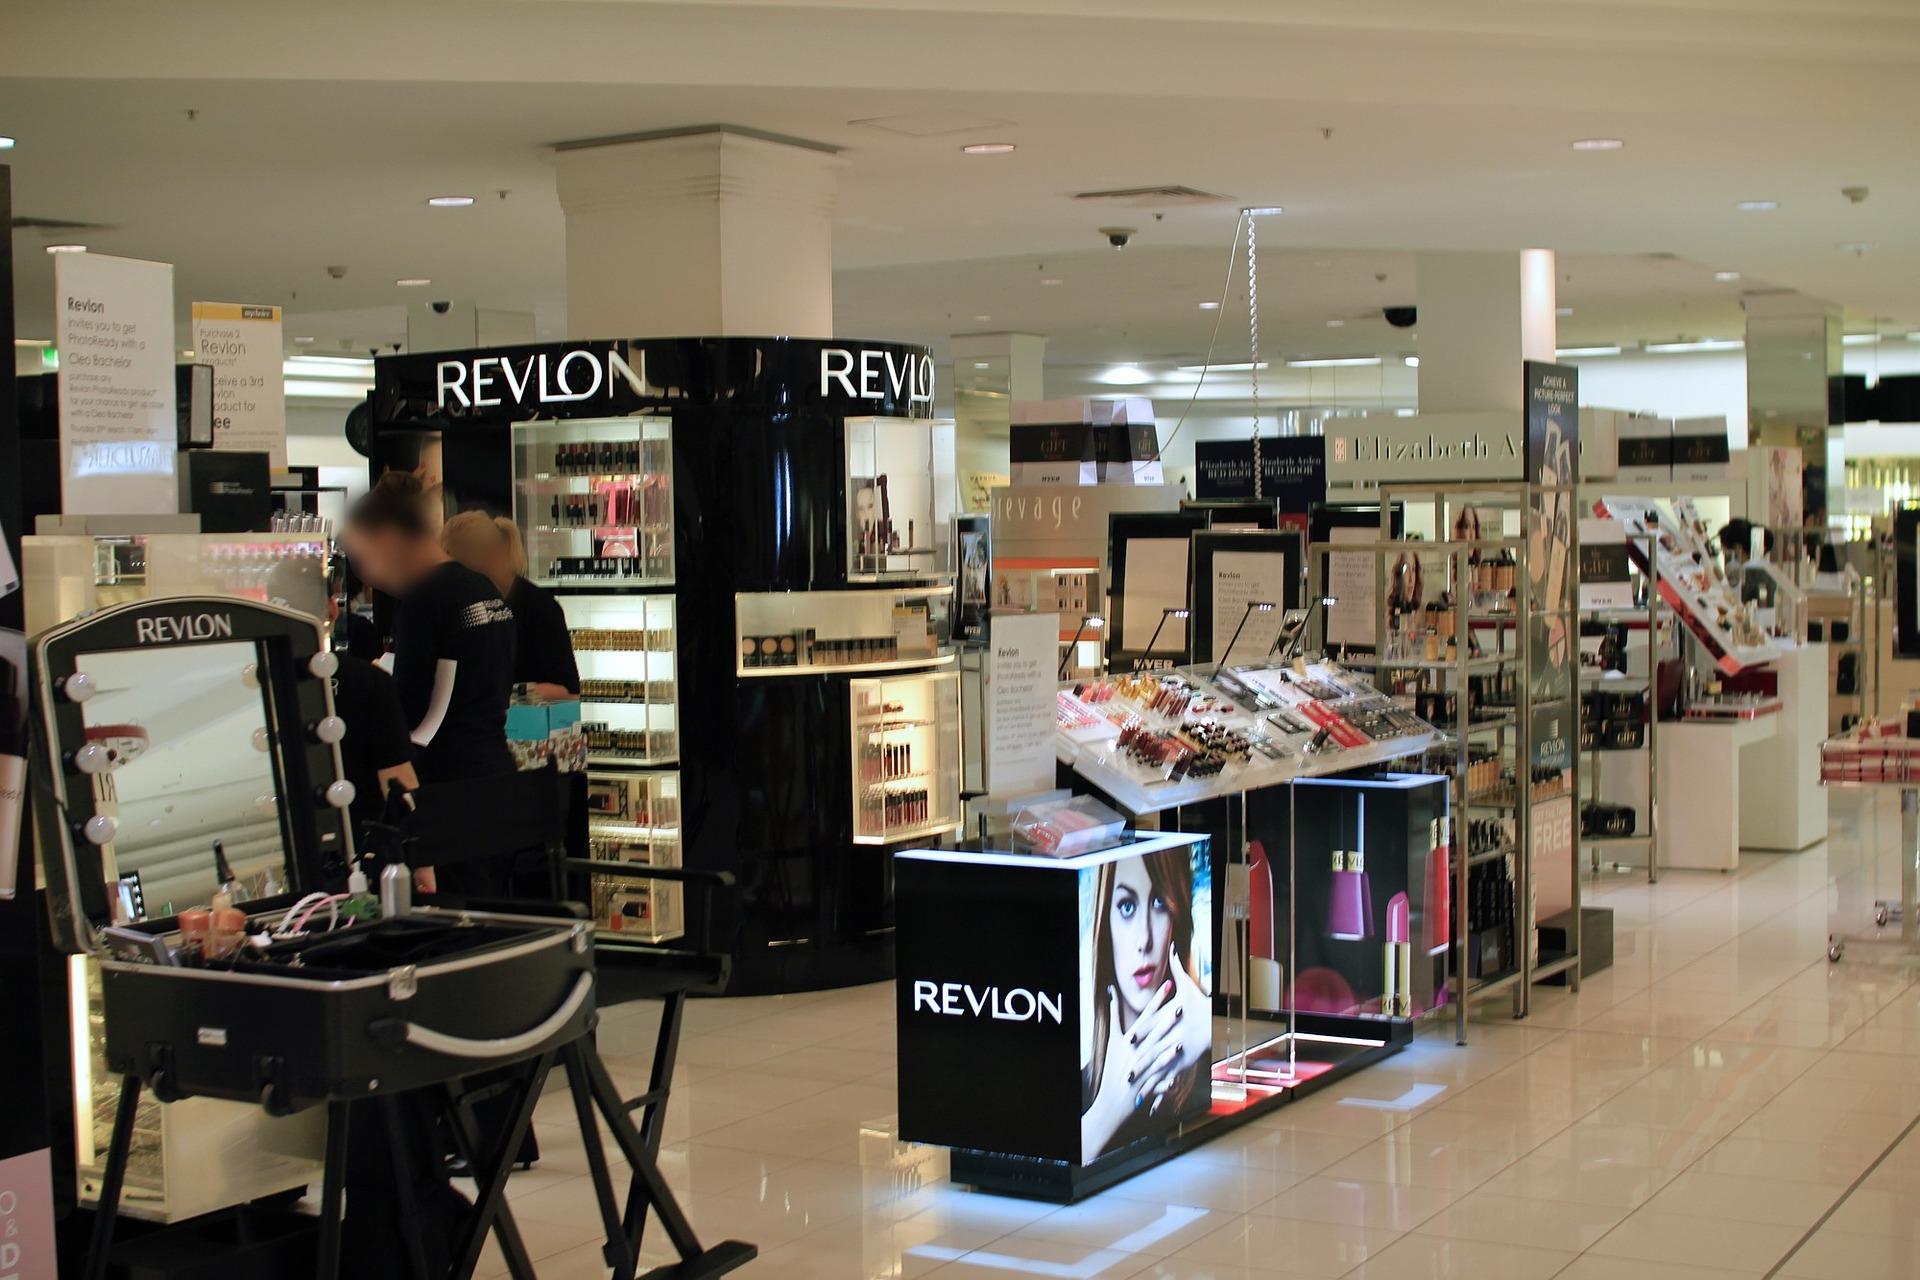 Perfumery and cosmetics shops